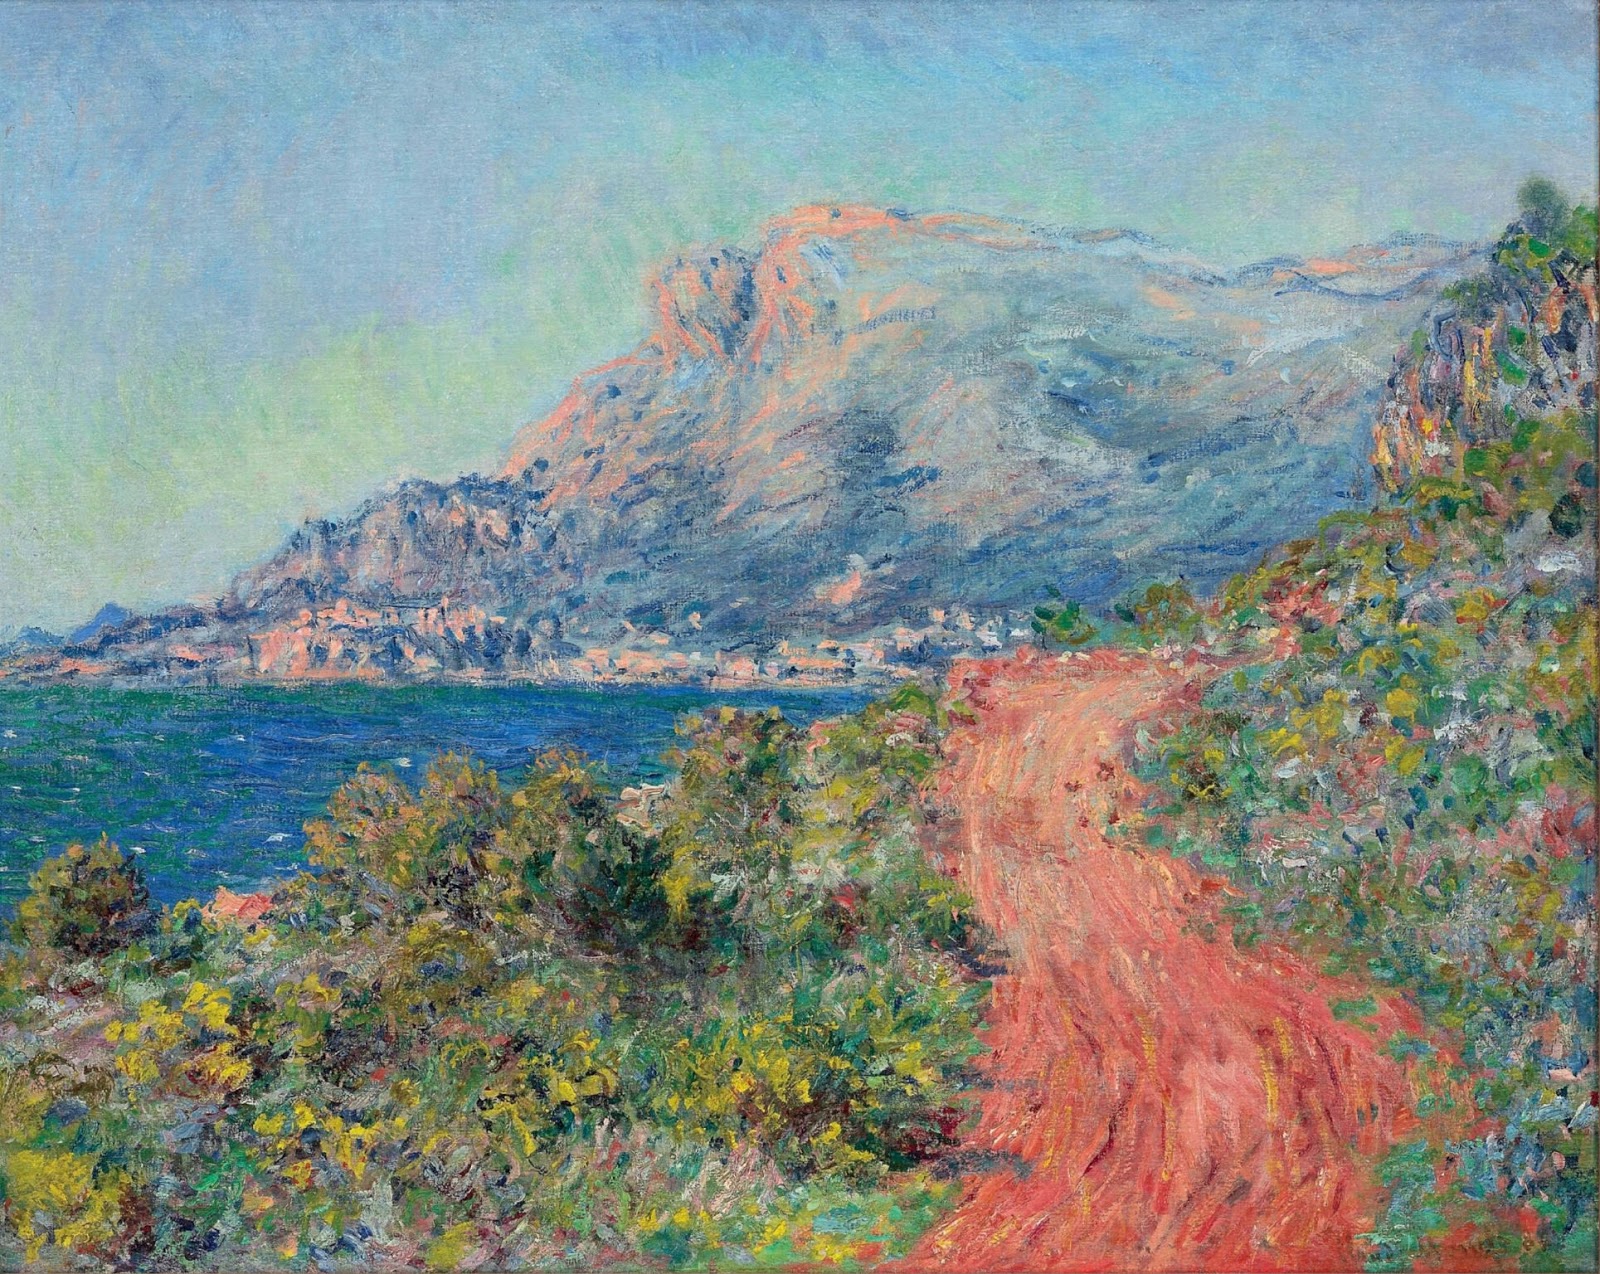 Claude+Monet-1840-1926 (800).jpg